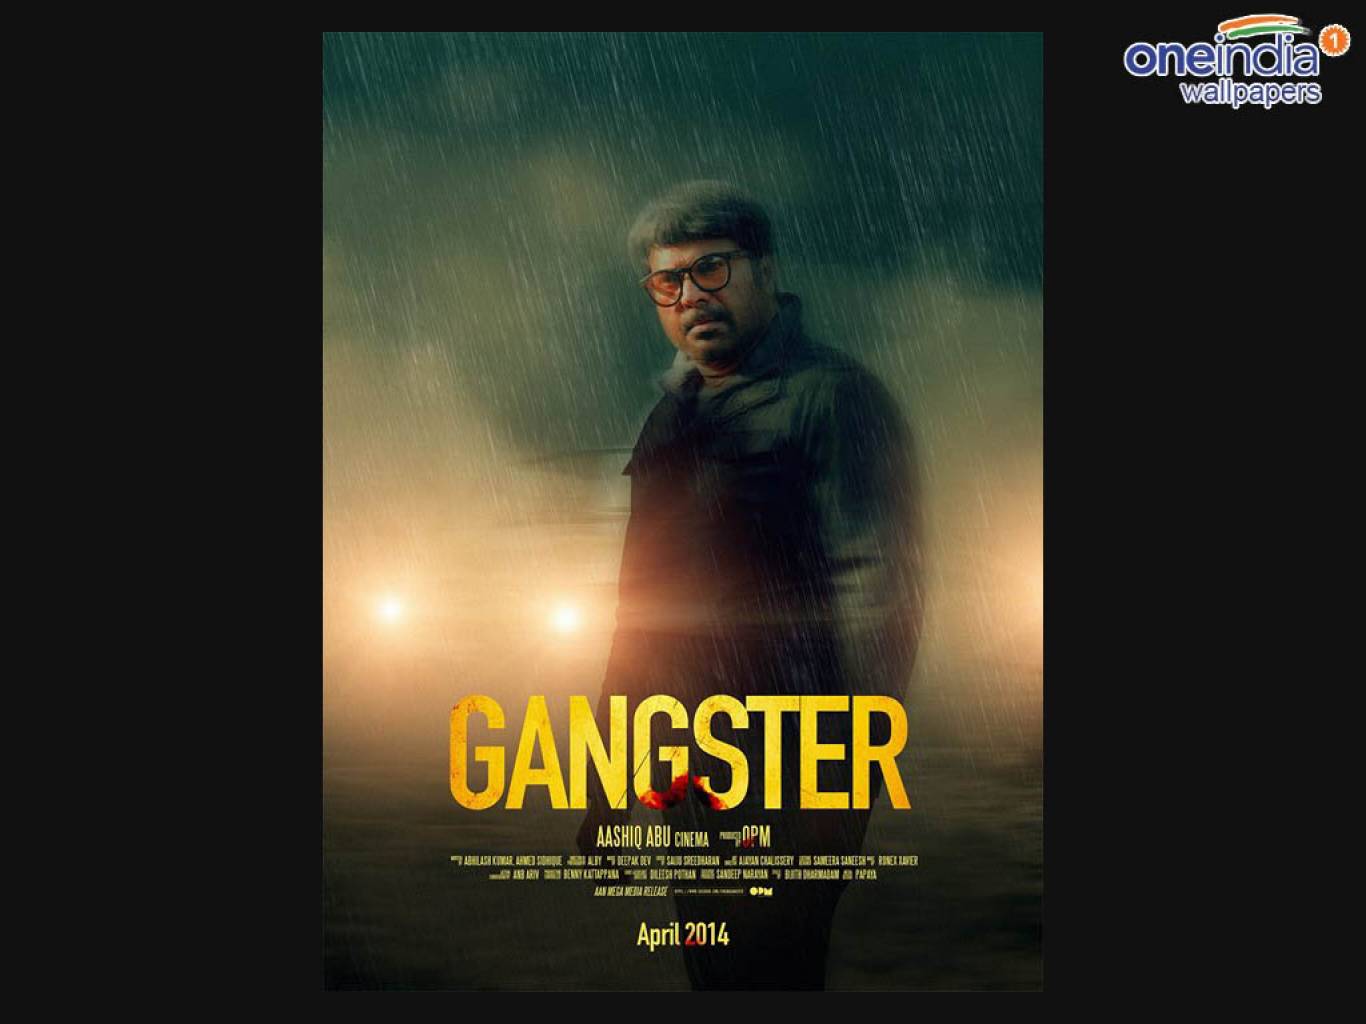 Gangster Movie HD Wallpaper. Gangster HD Movie Wallpaper Free Download (1080p to 2K)